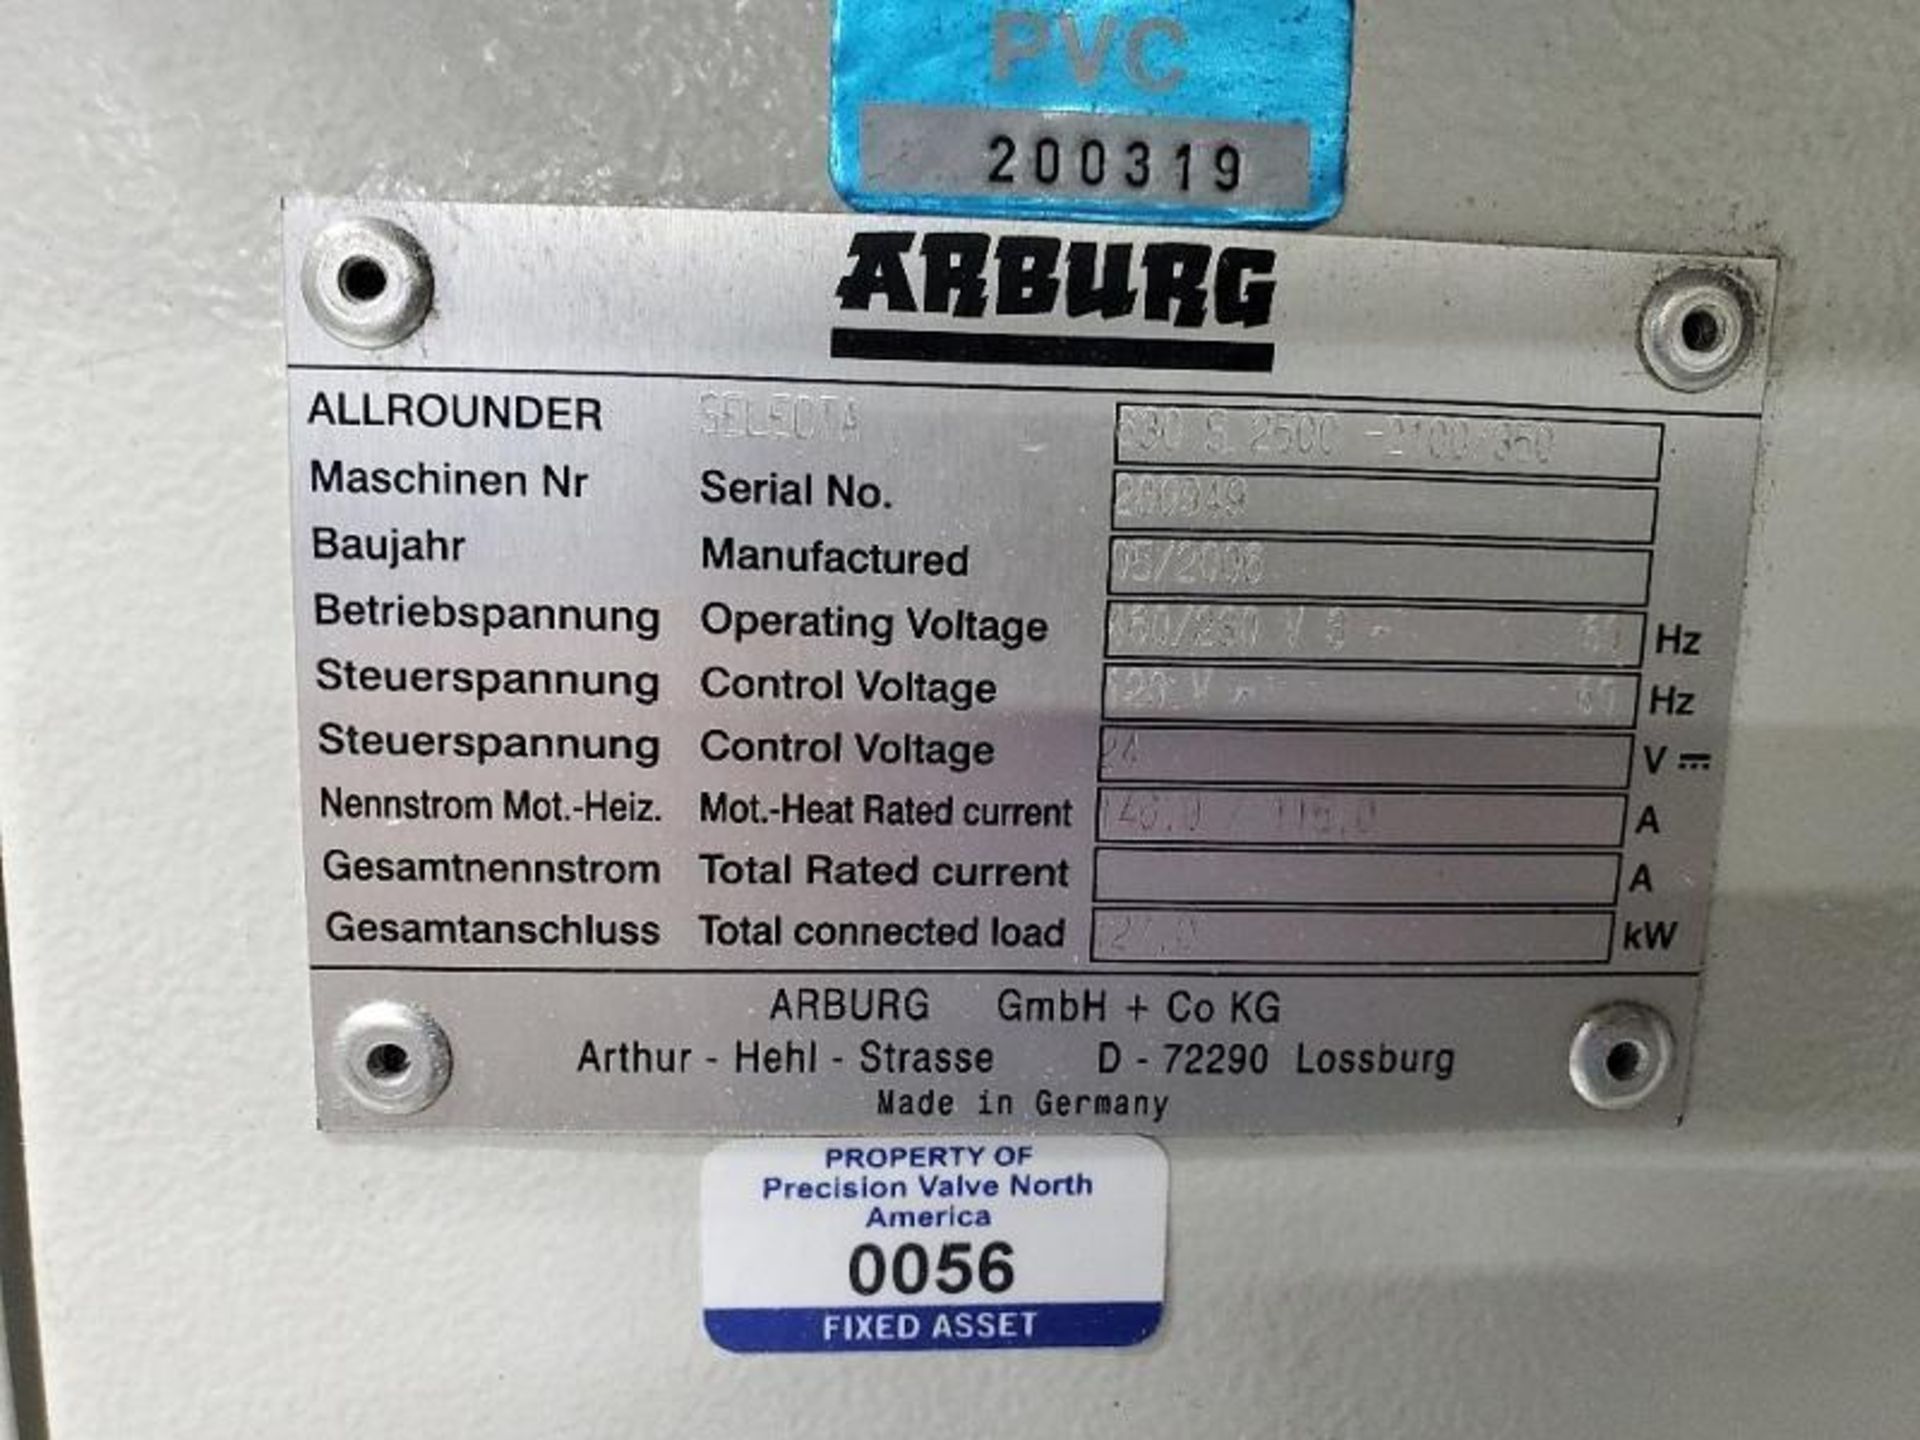 275 Ton ArburgÊ630 S 2500-2100/350 Injection Molding Machine, 10.2oz Shot Size, Selogica Control - Image 8 of 8